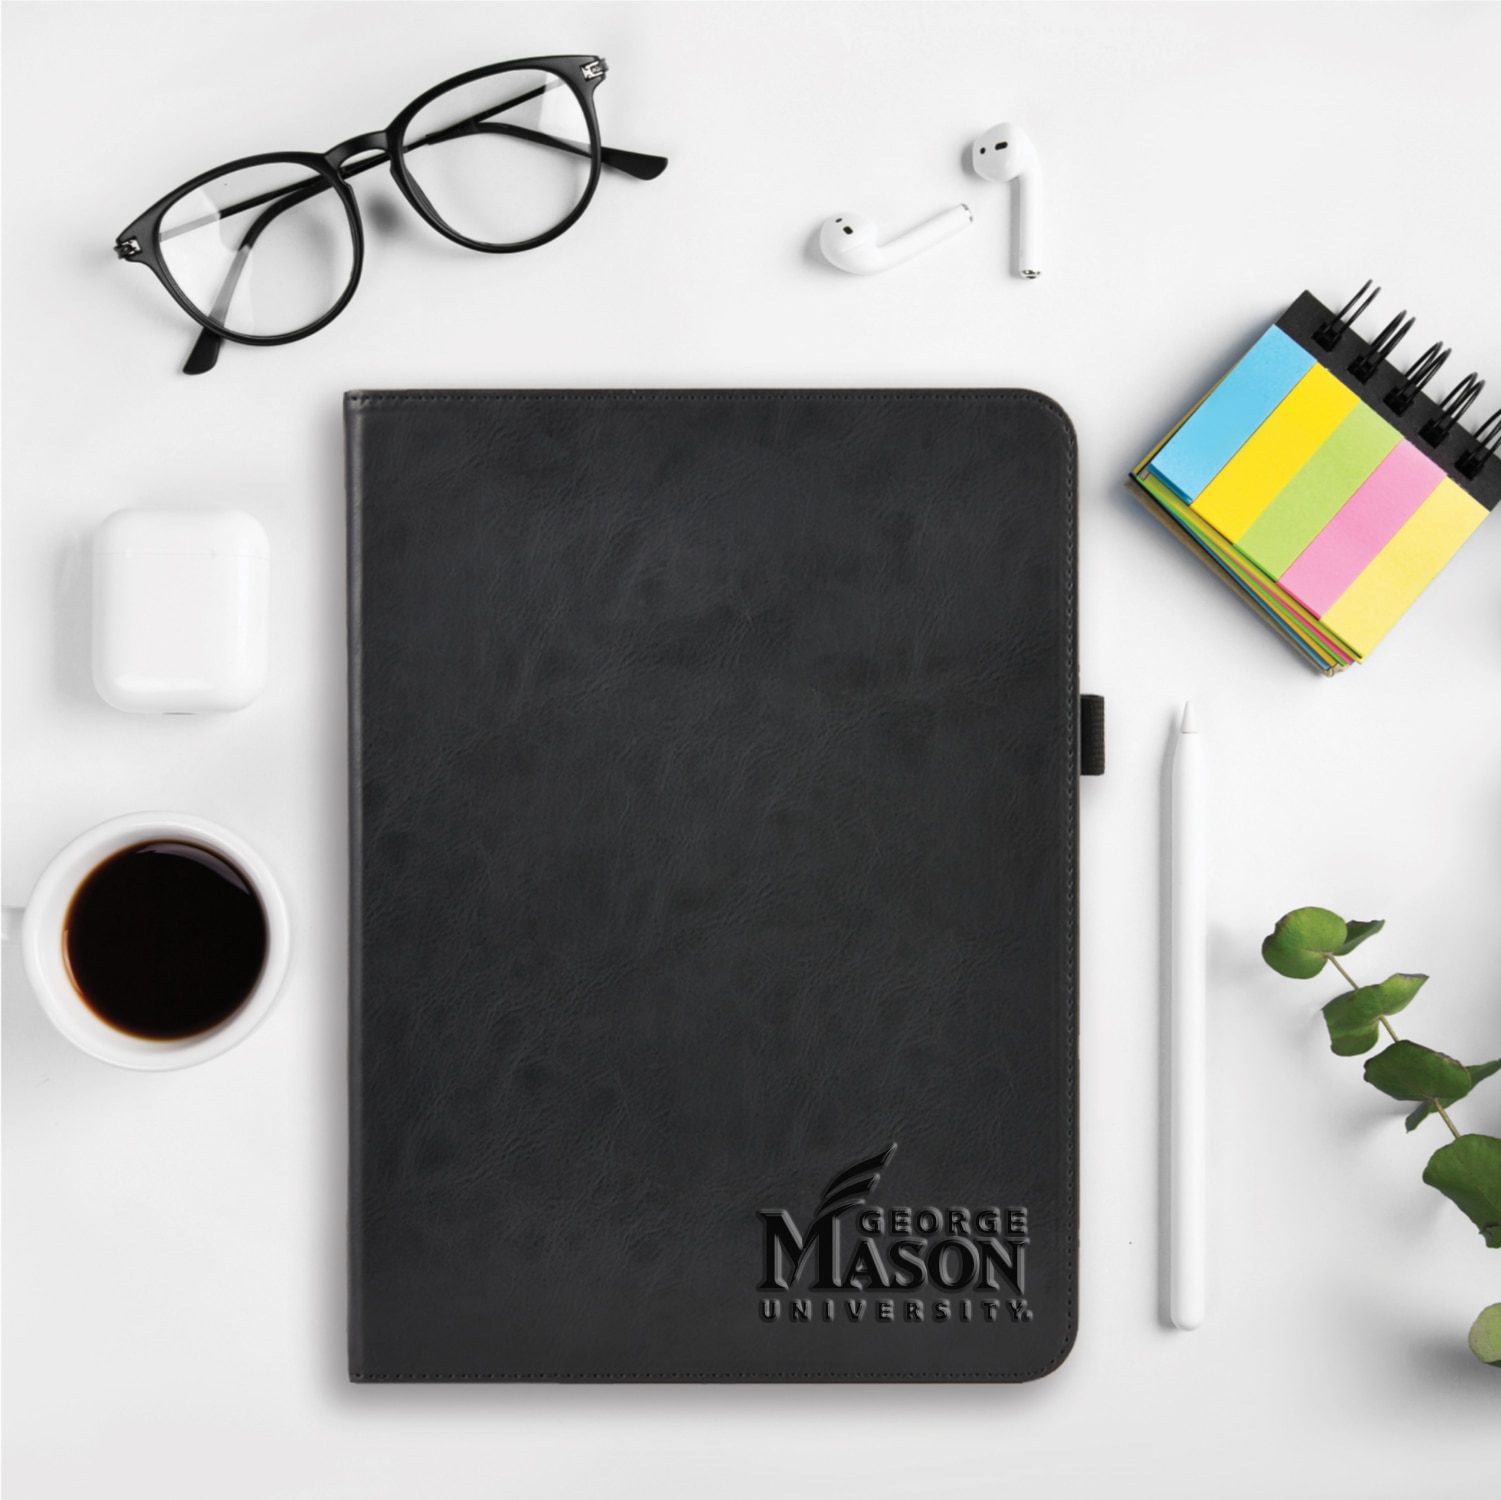 George Mason University Black Leather Folio Tablet Case, Alumni V2 - iPad Air (4th gen)